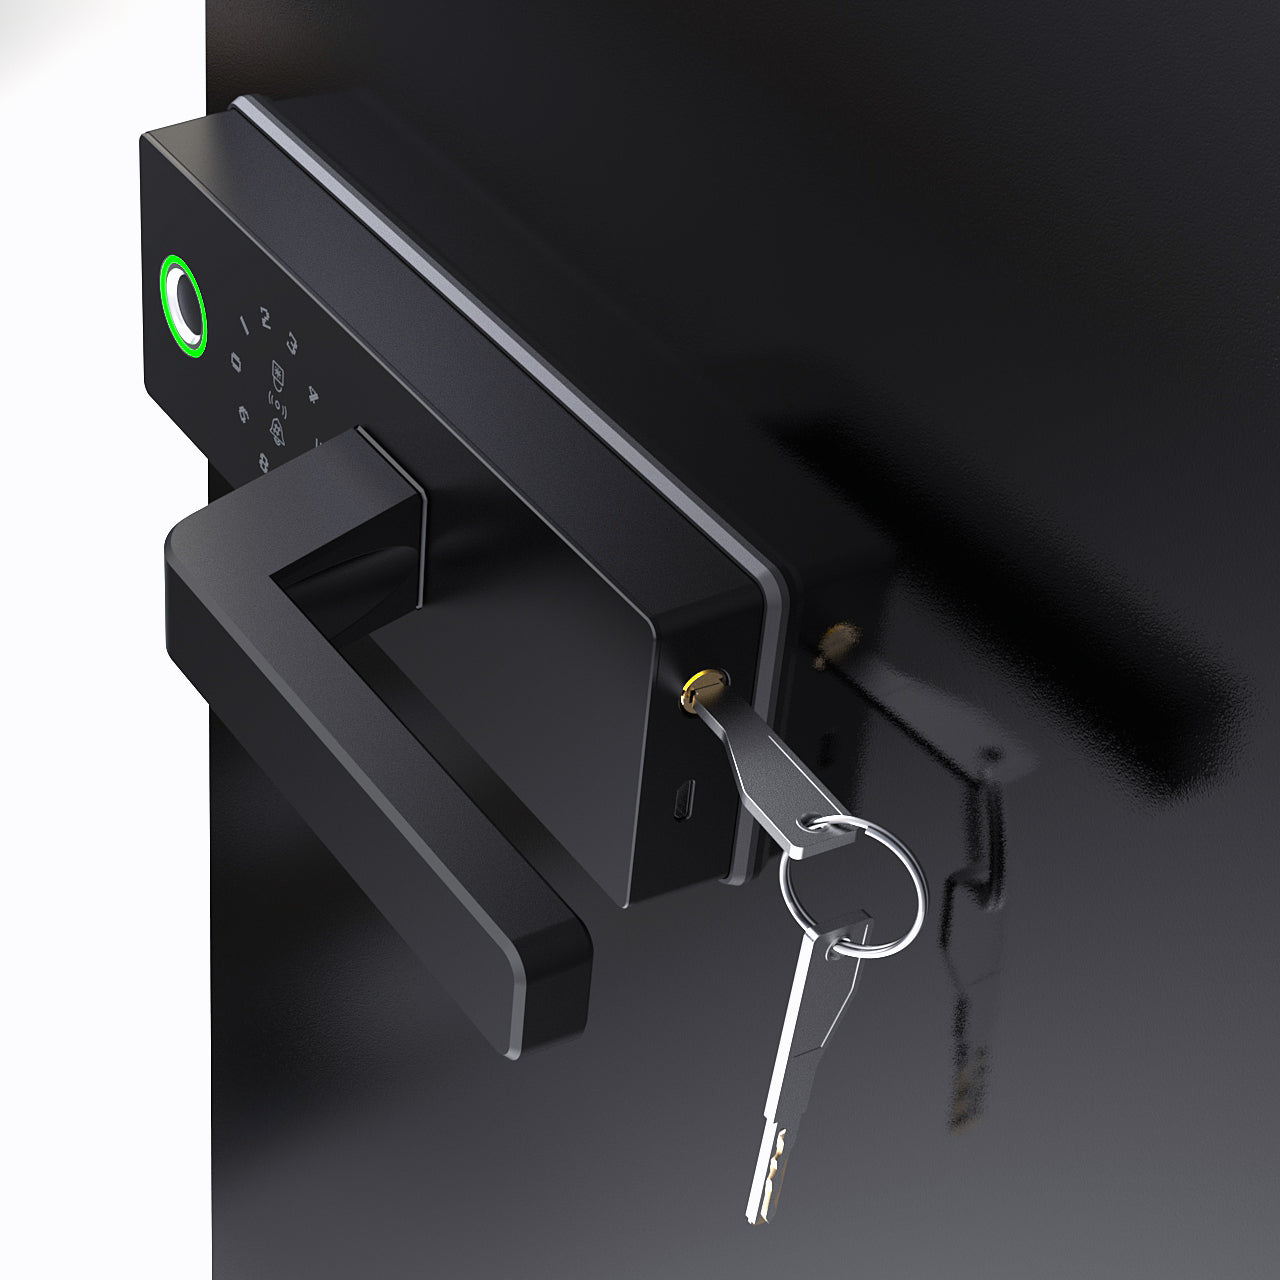 AnjieloSmart Intelligent Tuya App Rfid Pin Electronic Smart biometric fingerprint glass Smart door lock for office